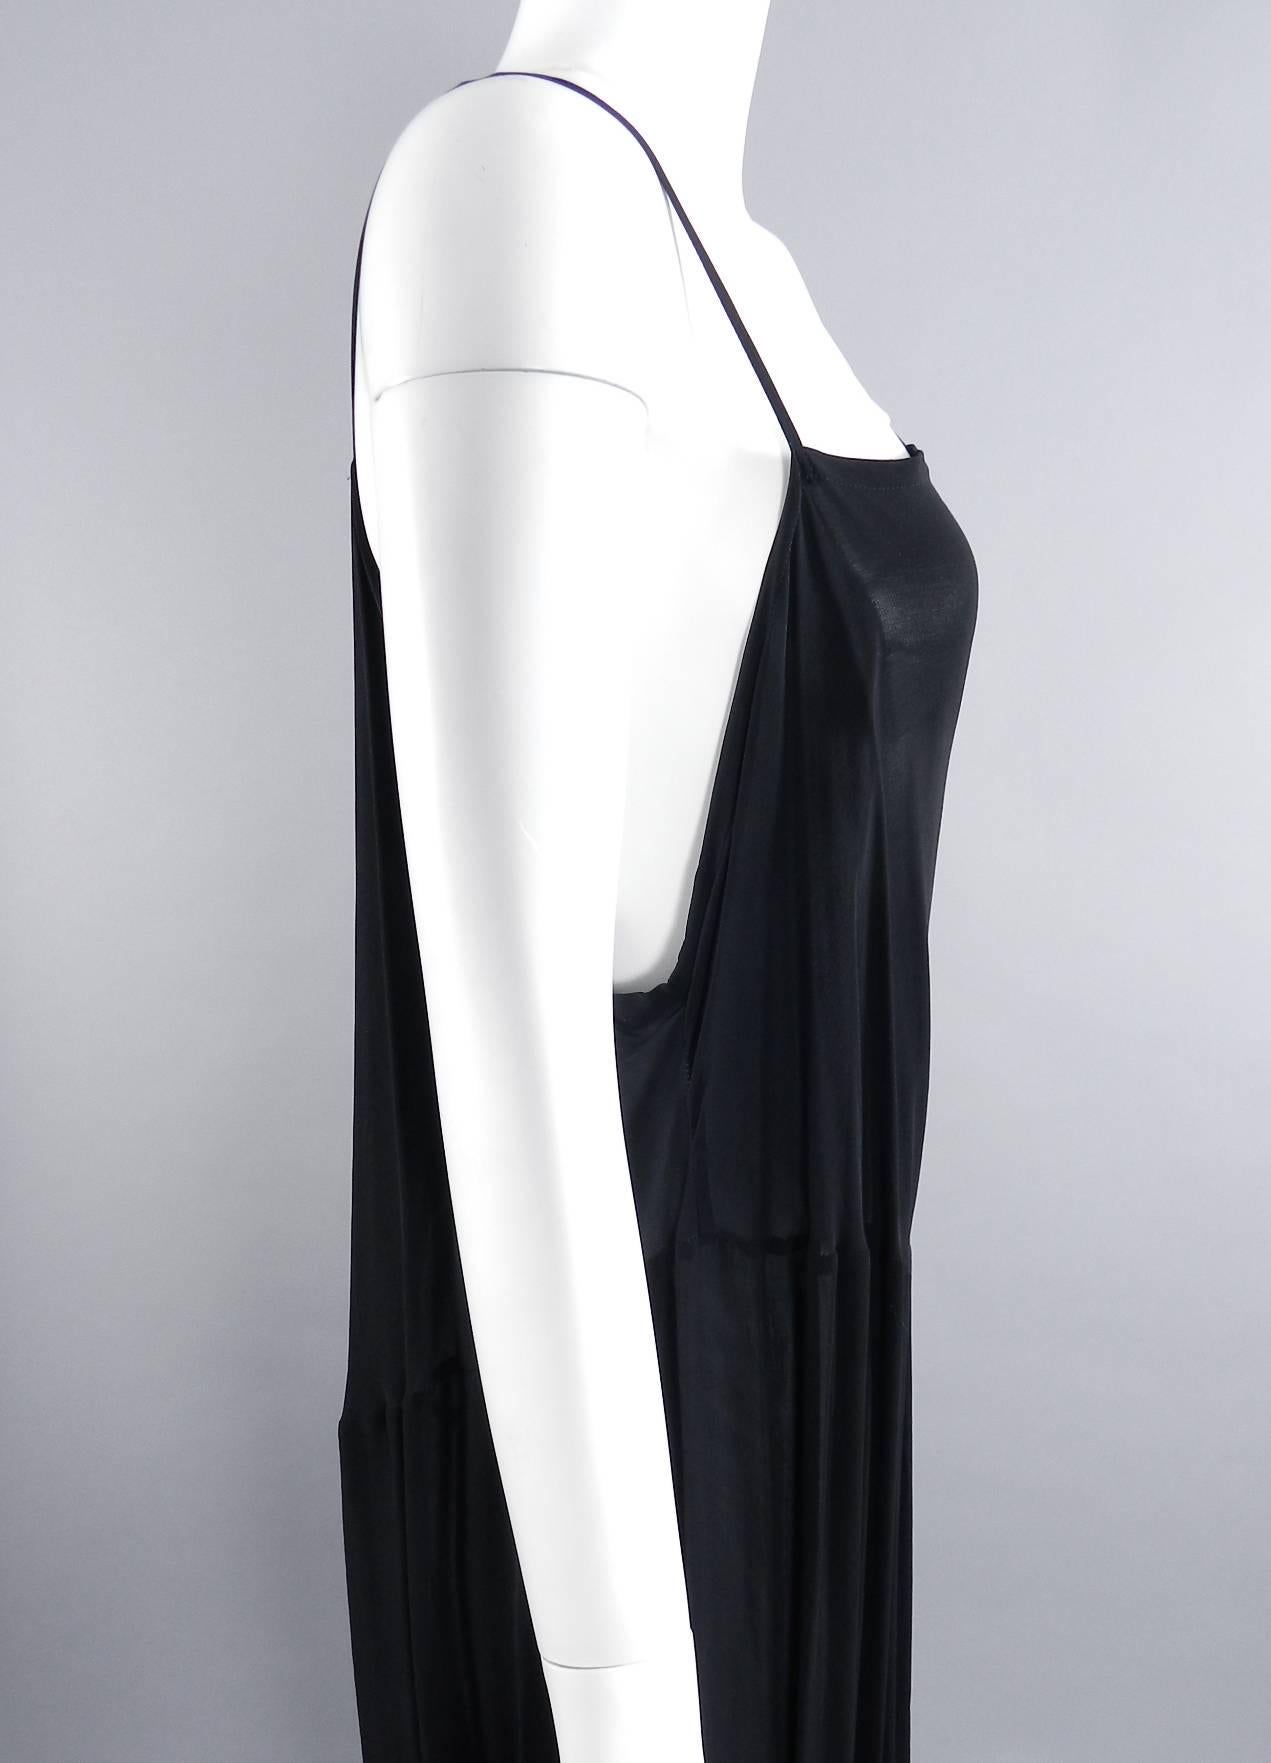 Yohji Yamamoto Vintage 1980’s Black Long Sheer Dress 1